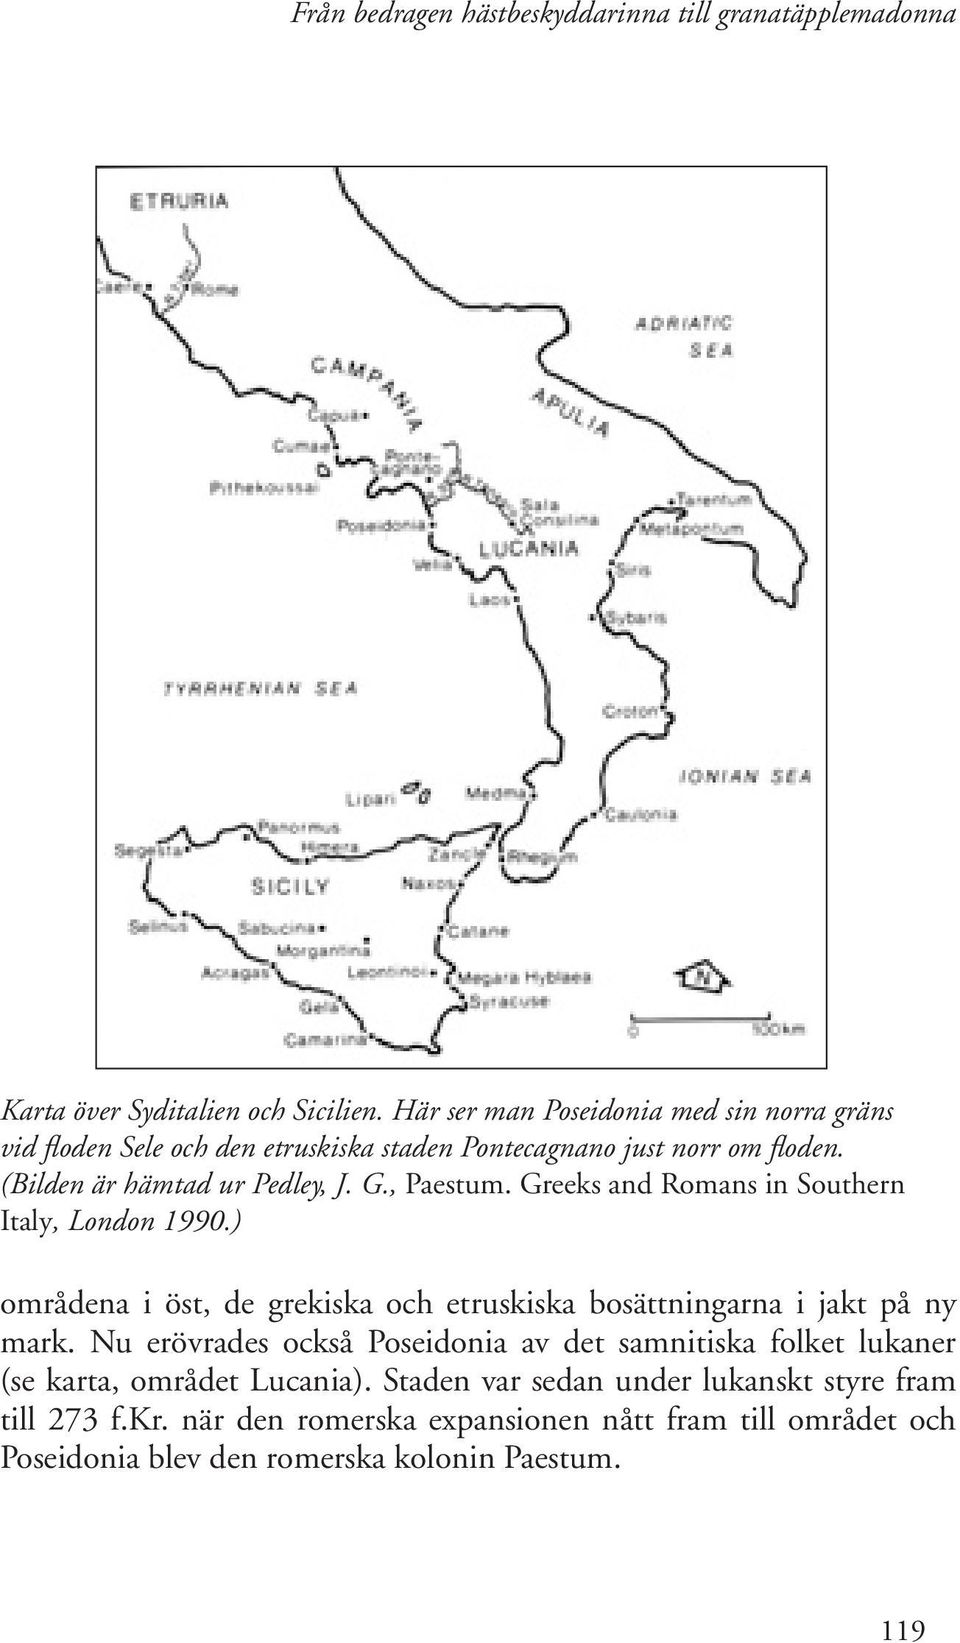 (Bilden är hämtad ur Pedley, J. G., Paestum. Greeks and Romans in Southern Italy, London 1990.